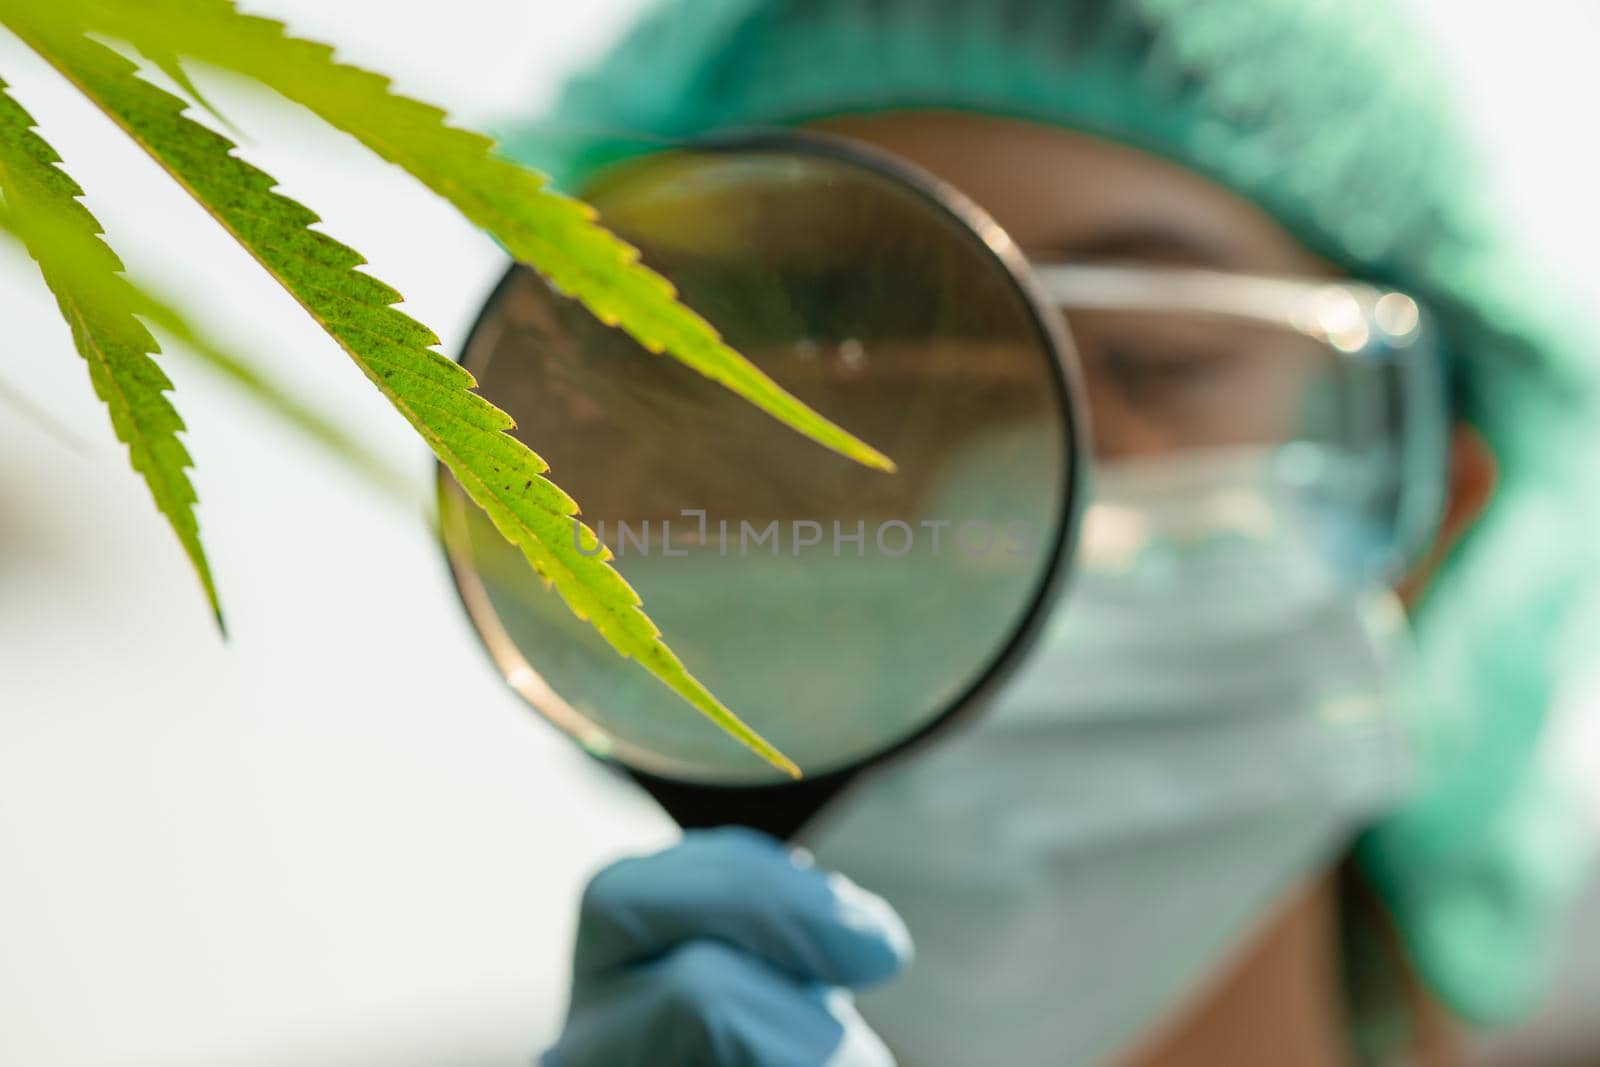 Farmer investigate Black Spot in Sativa Cannabis plant leaf disease using magnify glass. by qualitystocks